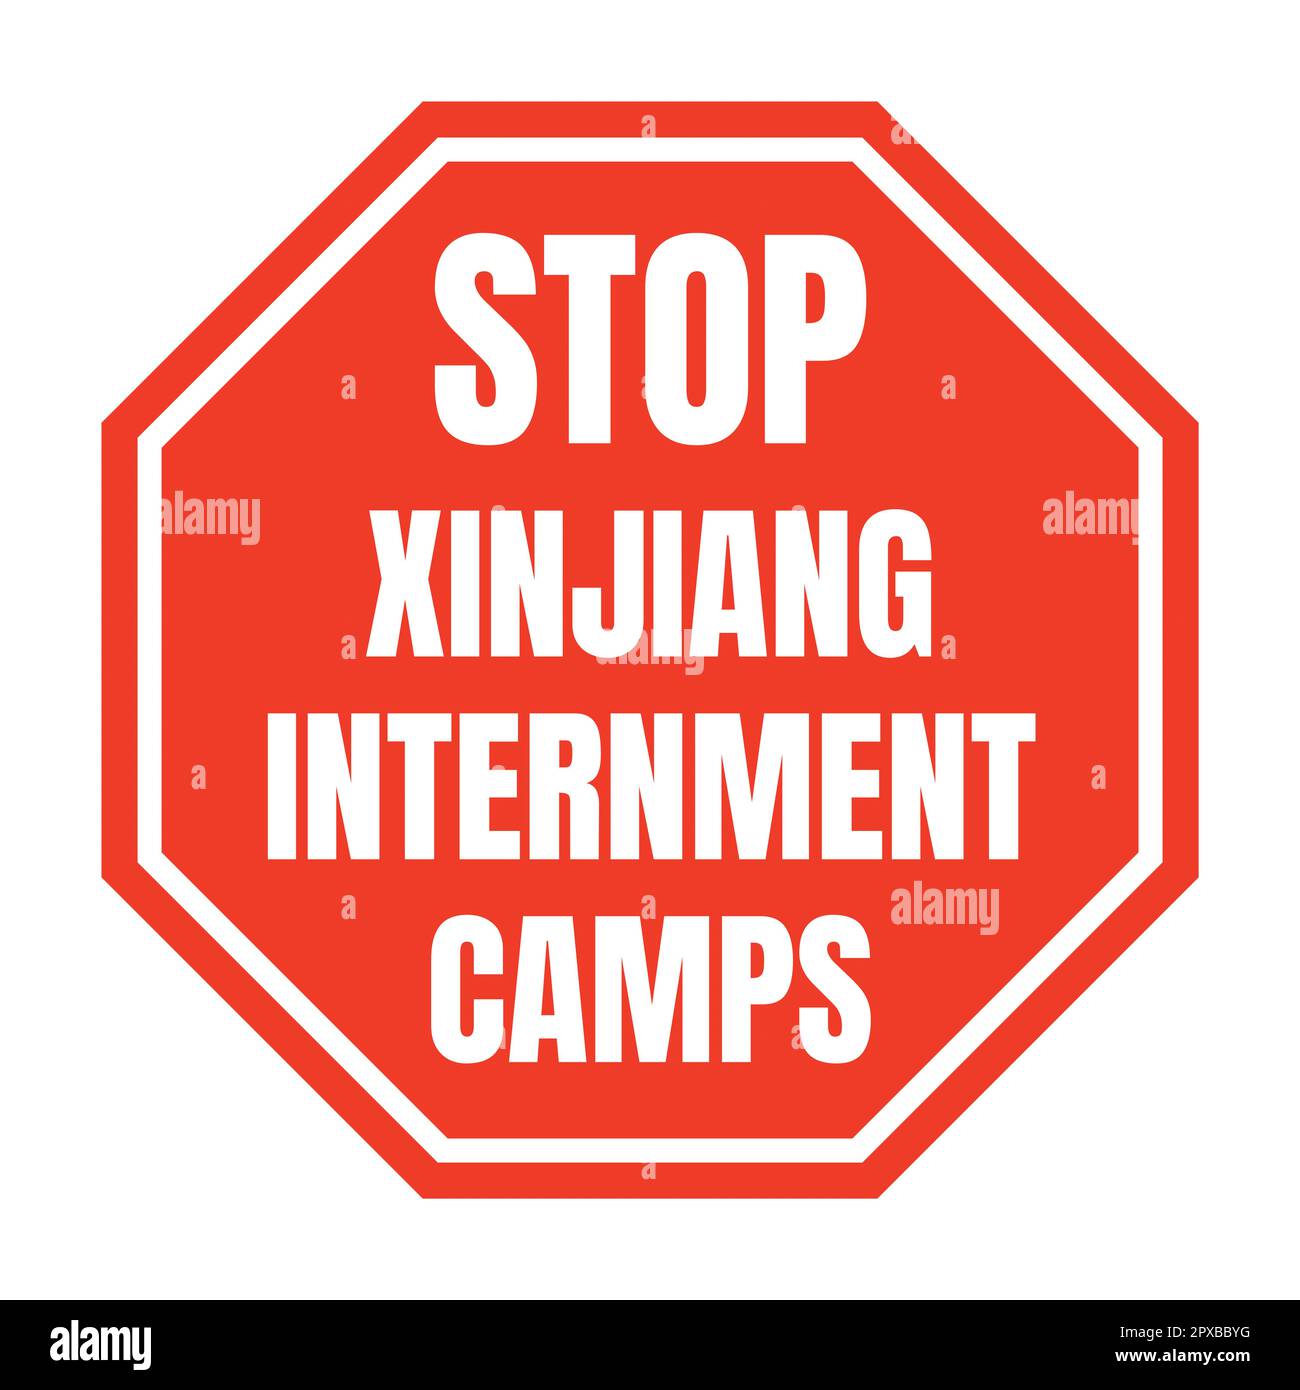 Stop Xinjiang internment camps symbol icon Stock Photo